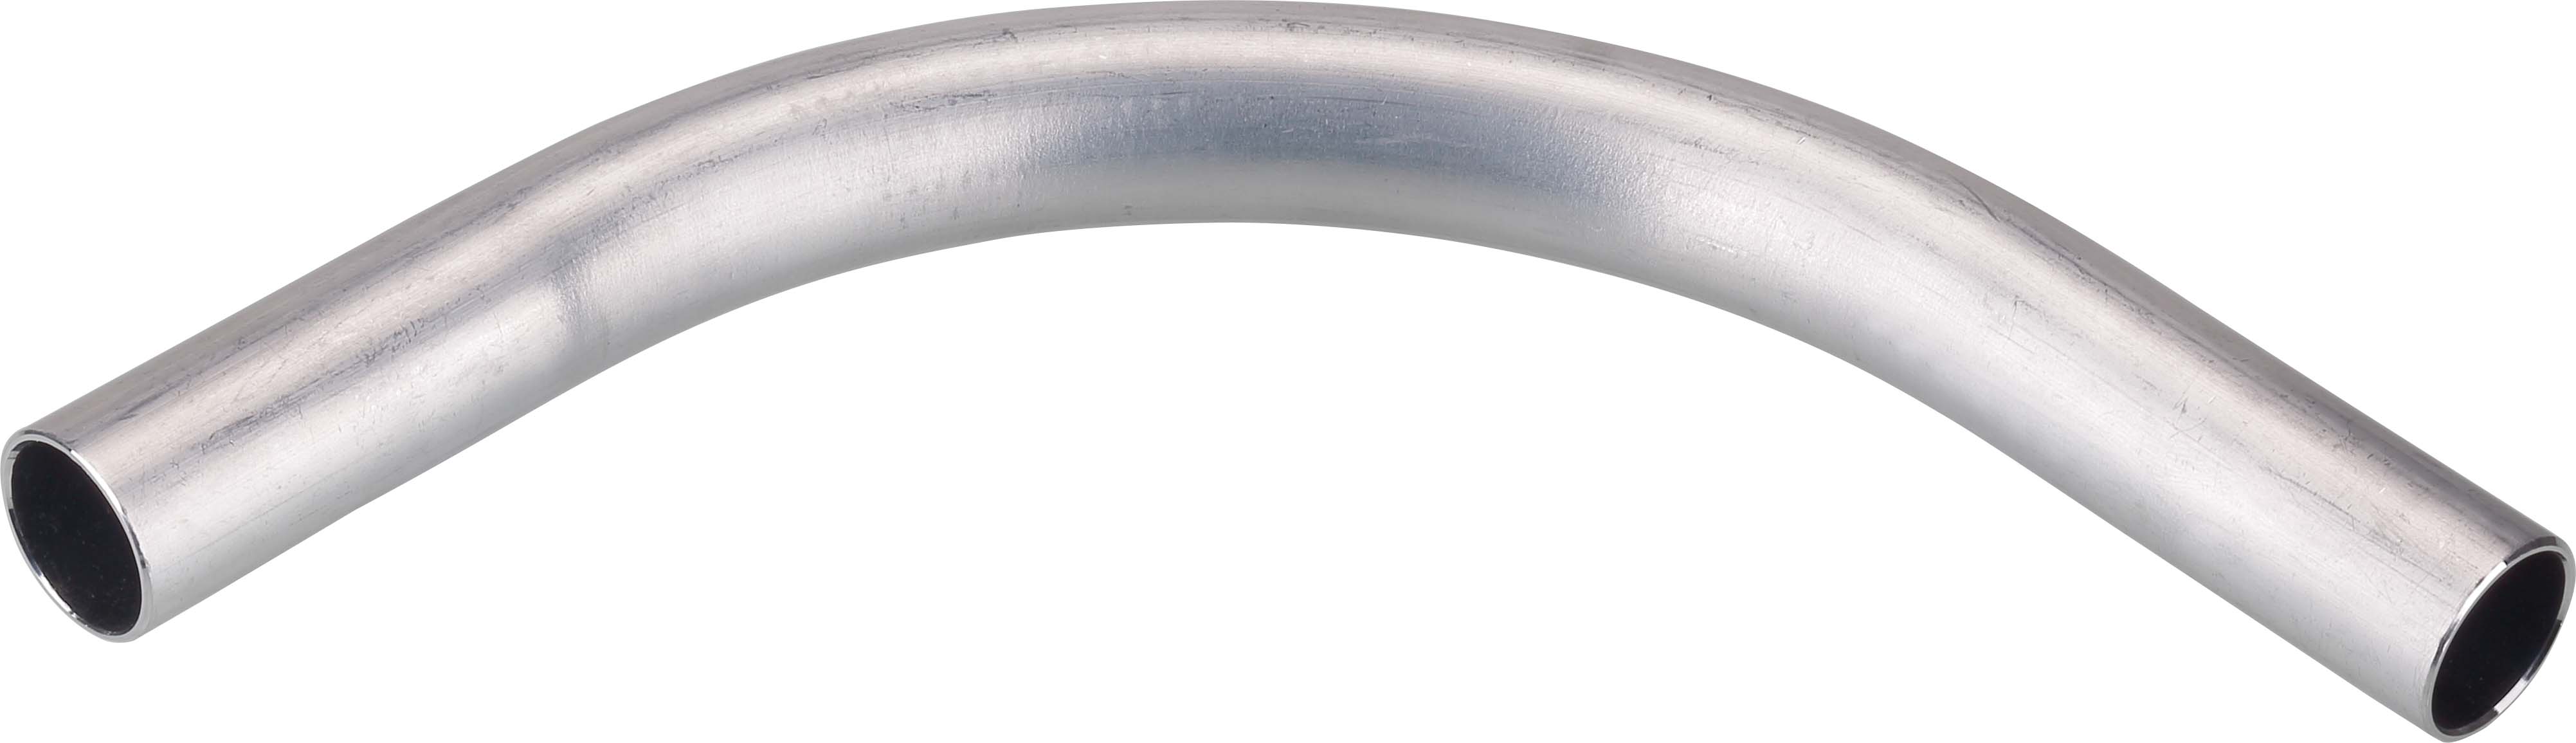 Fränkische Aluminium-Steckbogen ABS-E 20 - 20960020